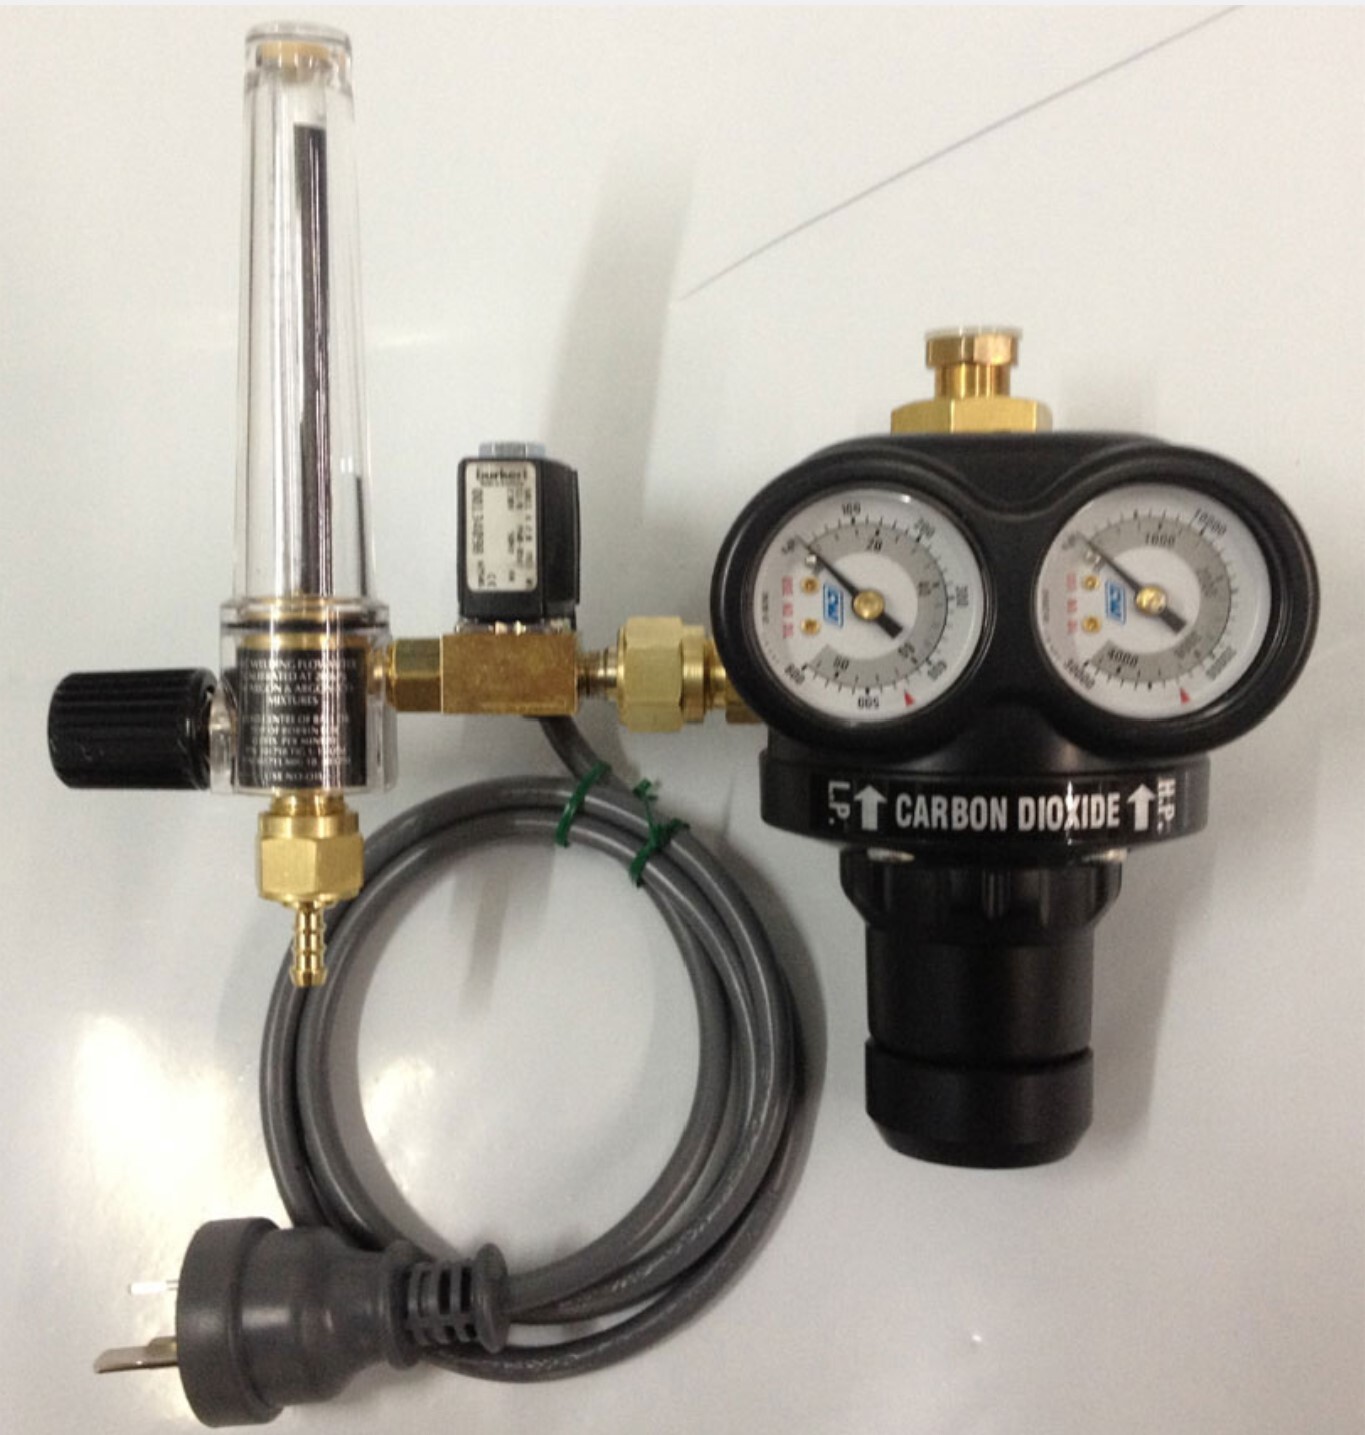 CO2 Gas regulator flow meter and solenoid kit